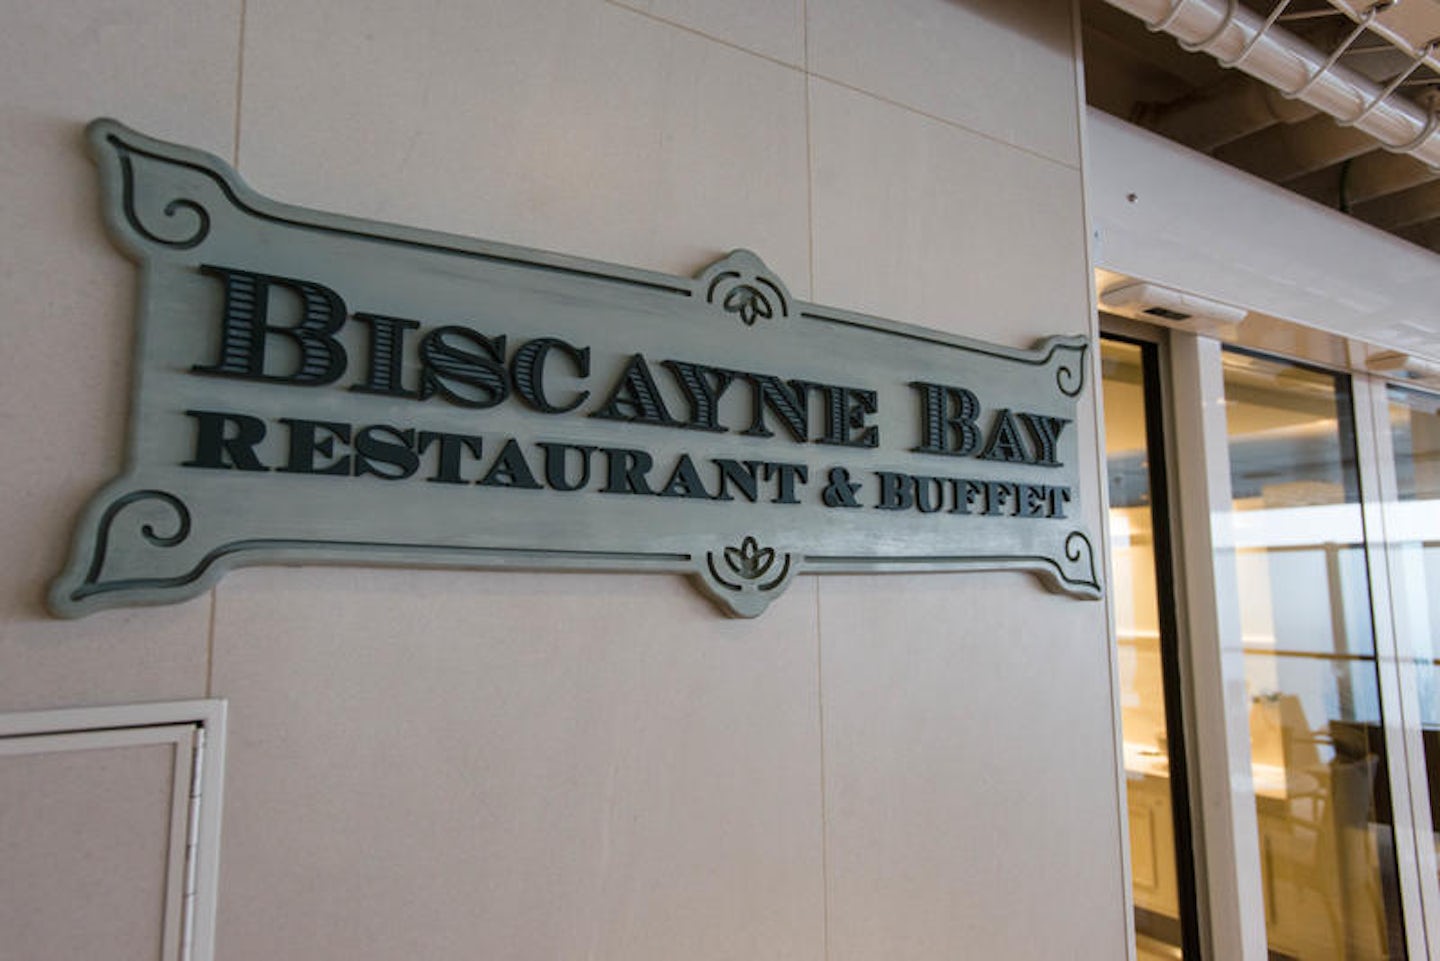 Biscayne Bay Restaurant & Buffet on MSC Seaside